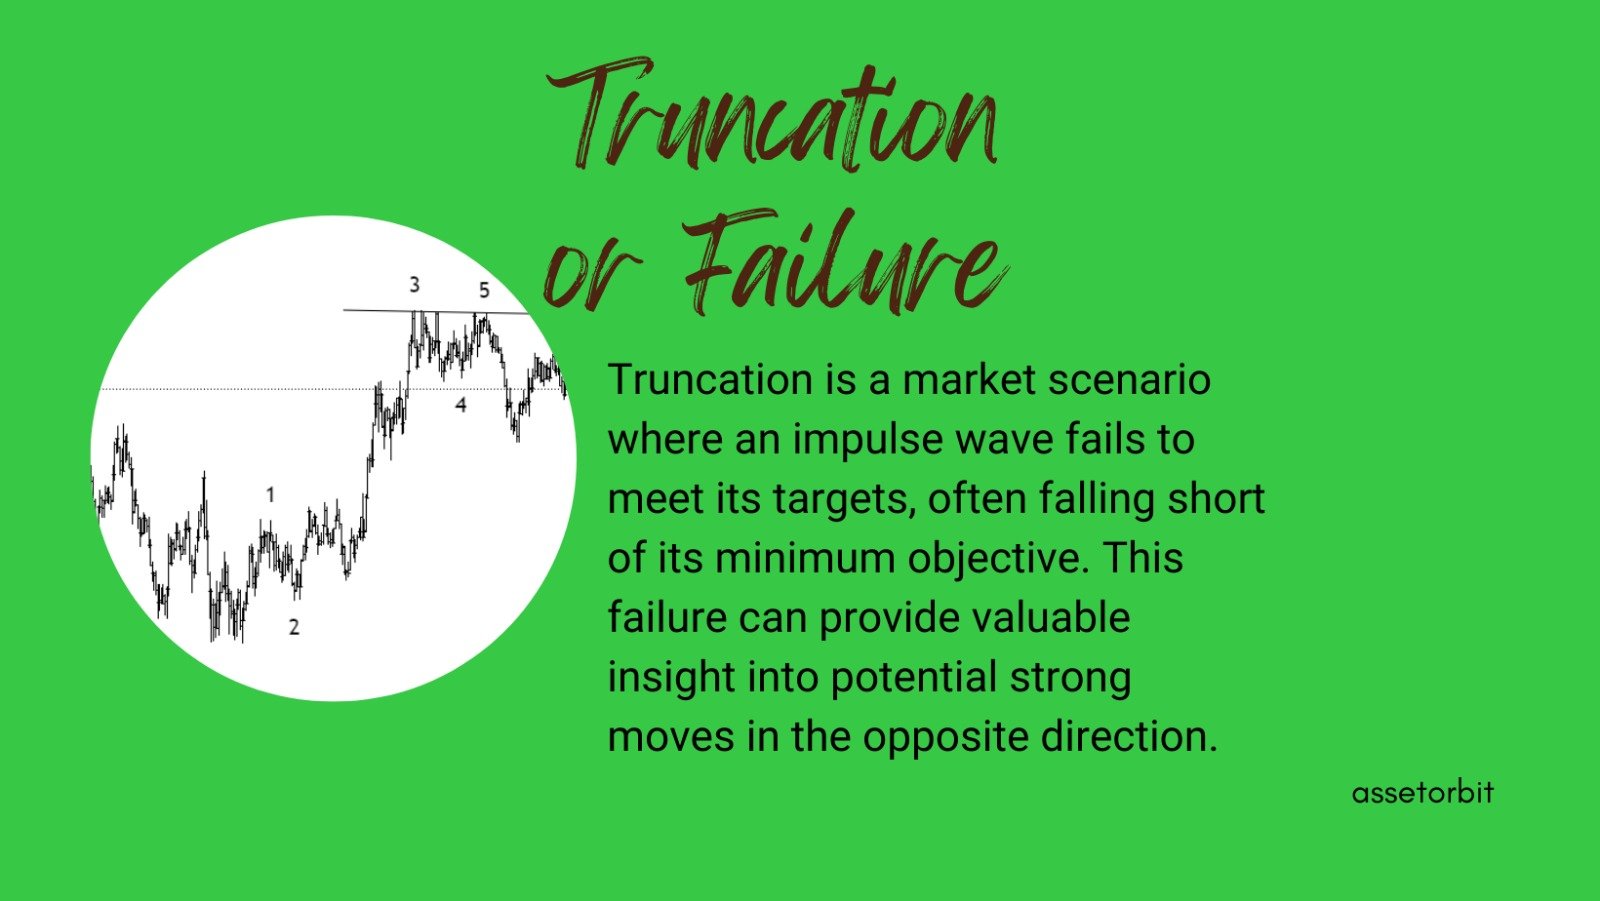 Truncation or Failure in Impulse